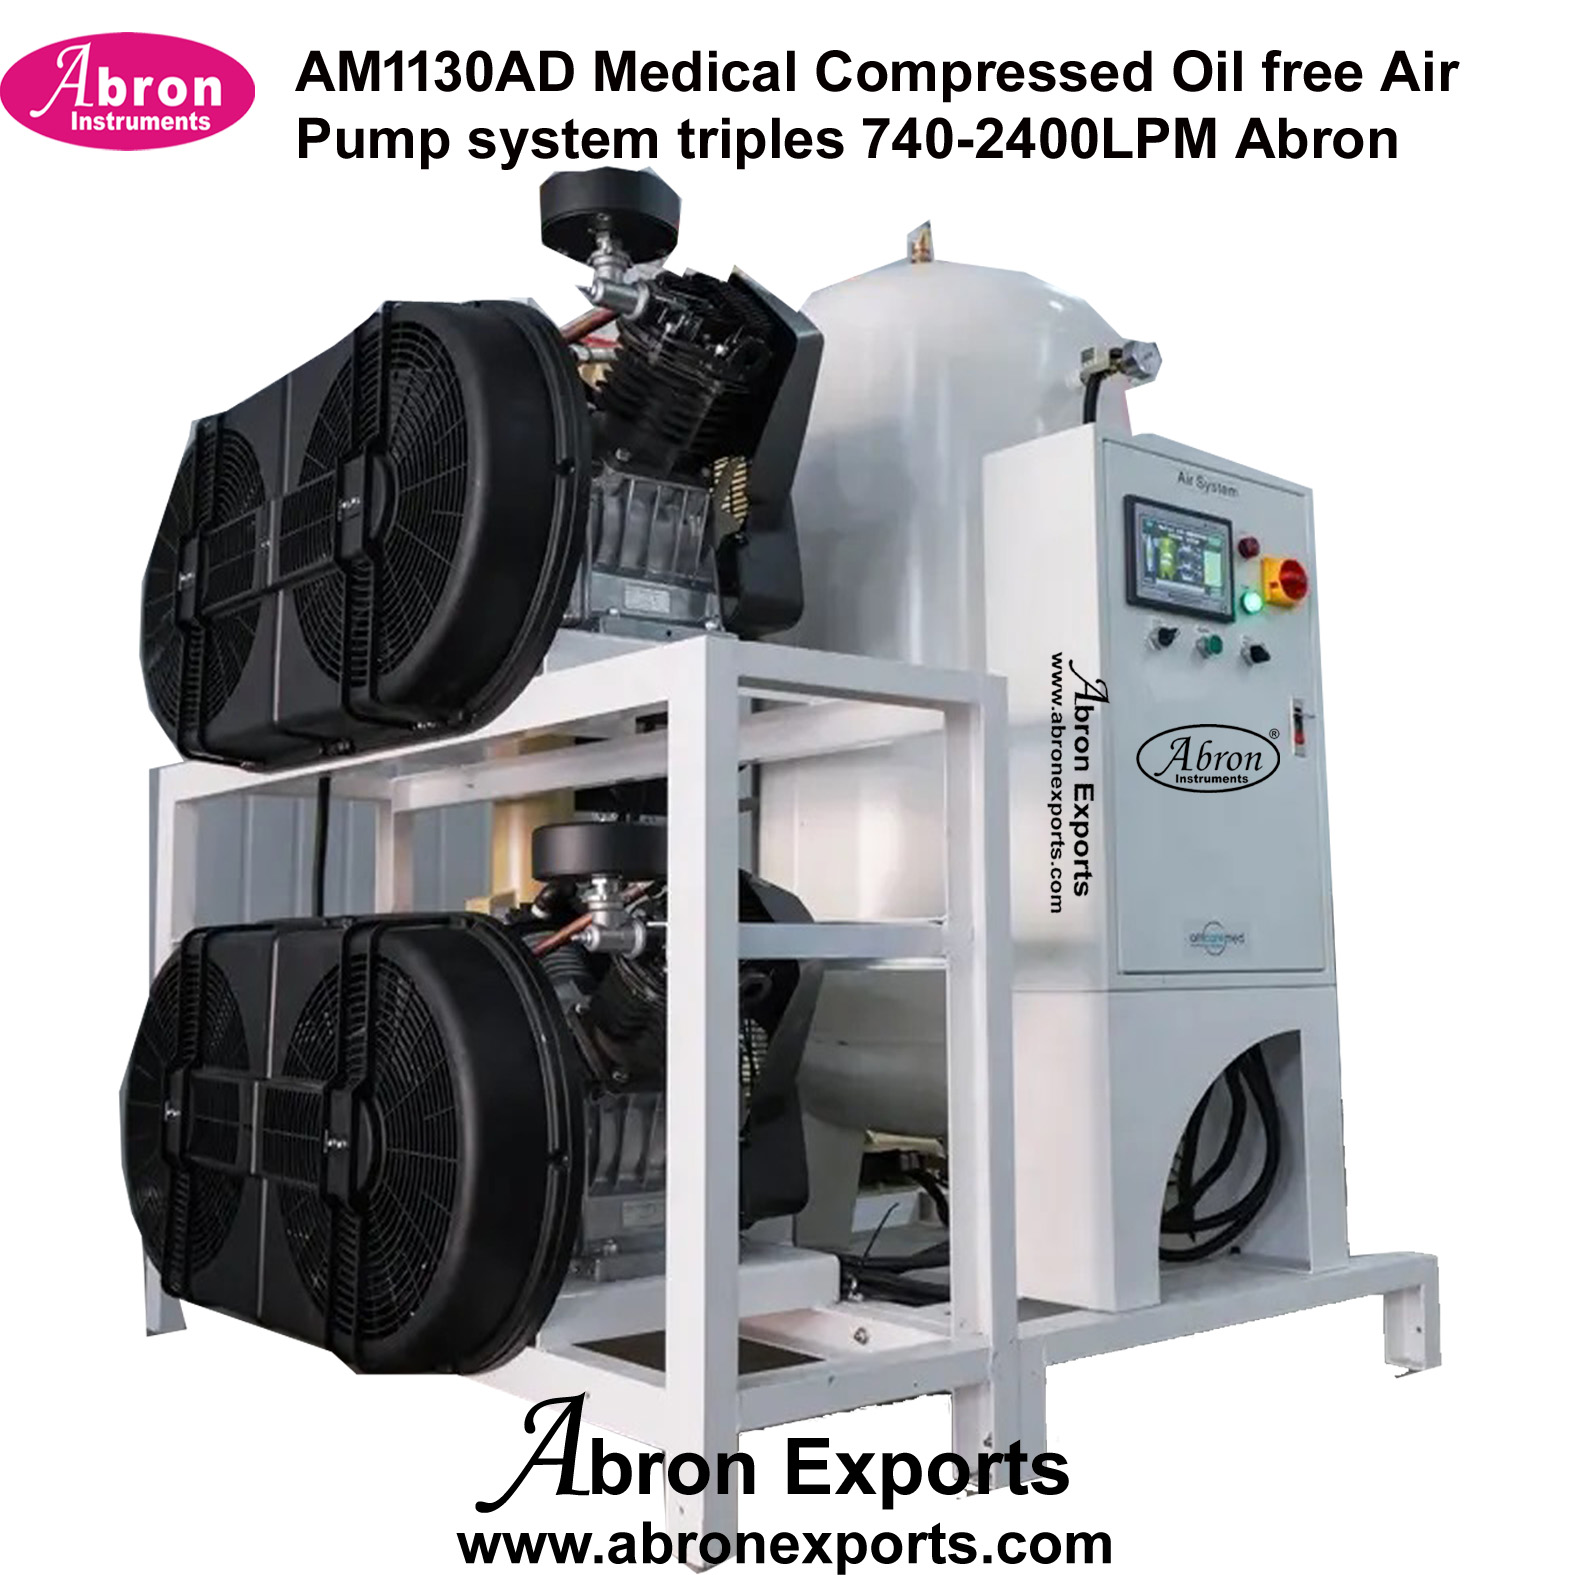 Medical Compressed Oil free Air Pump System Triples 740-2400LPM Abron Amcaremed ABM-1130ADT 